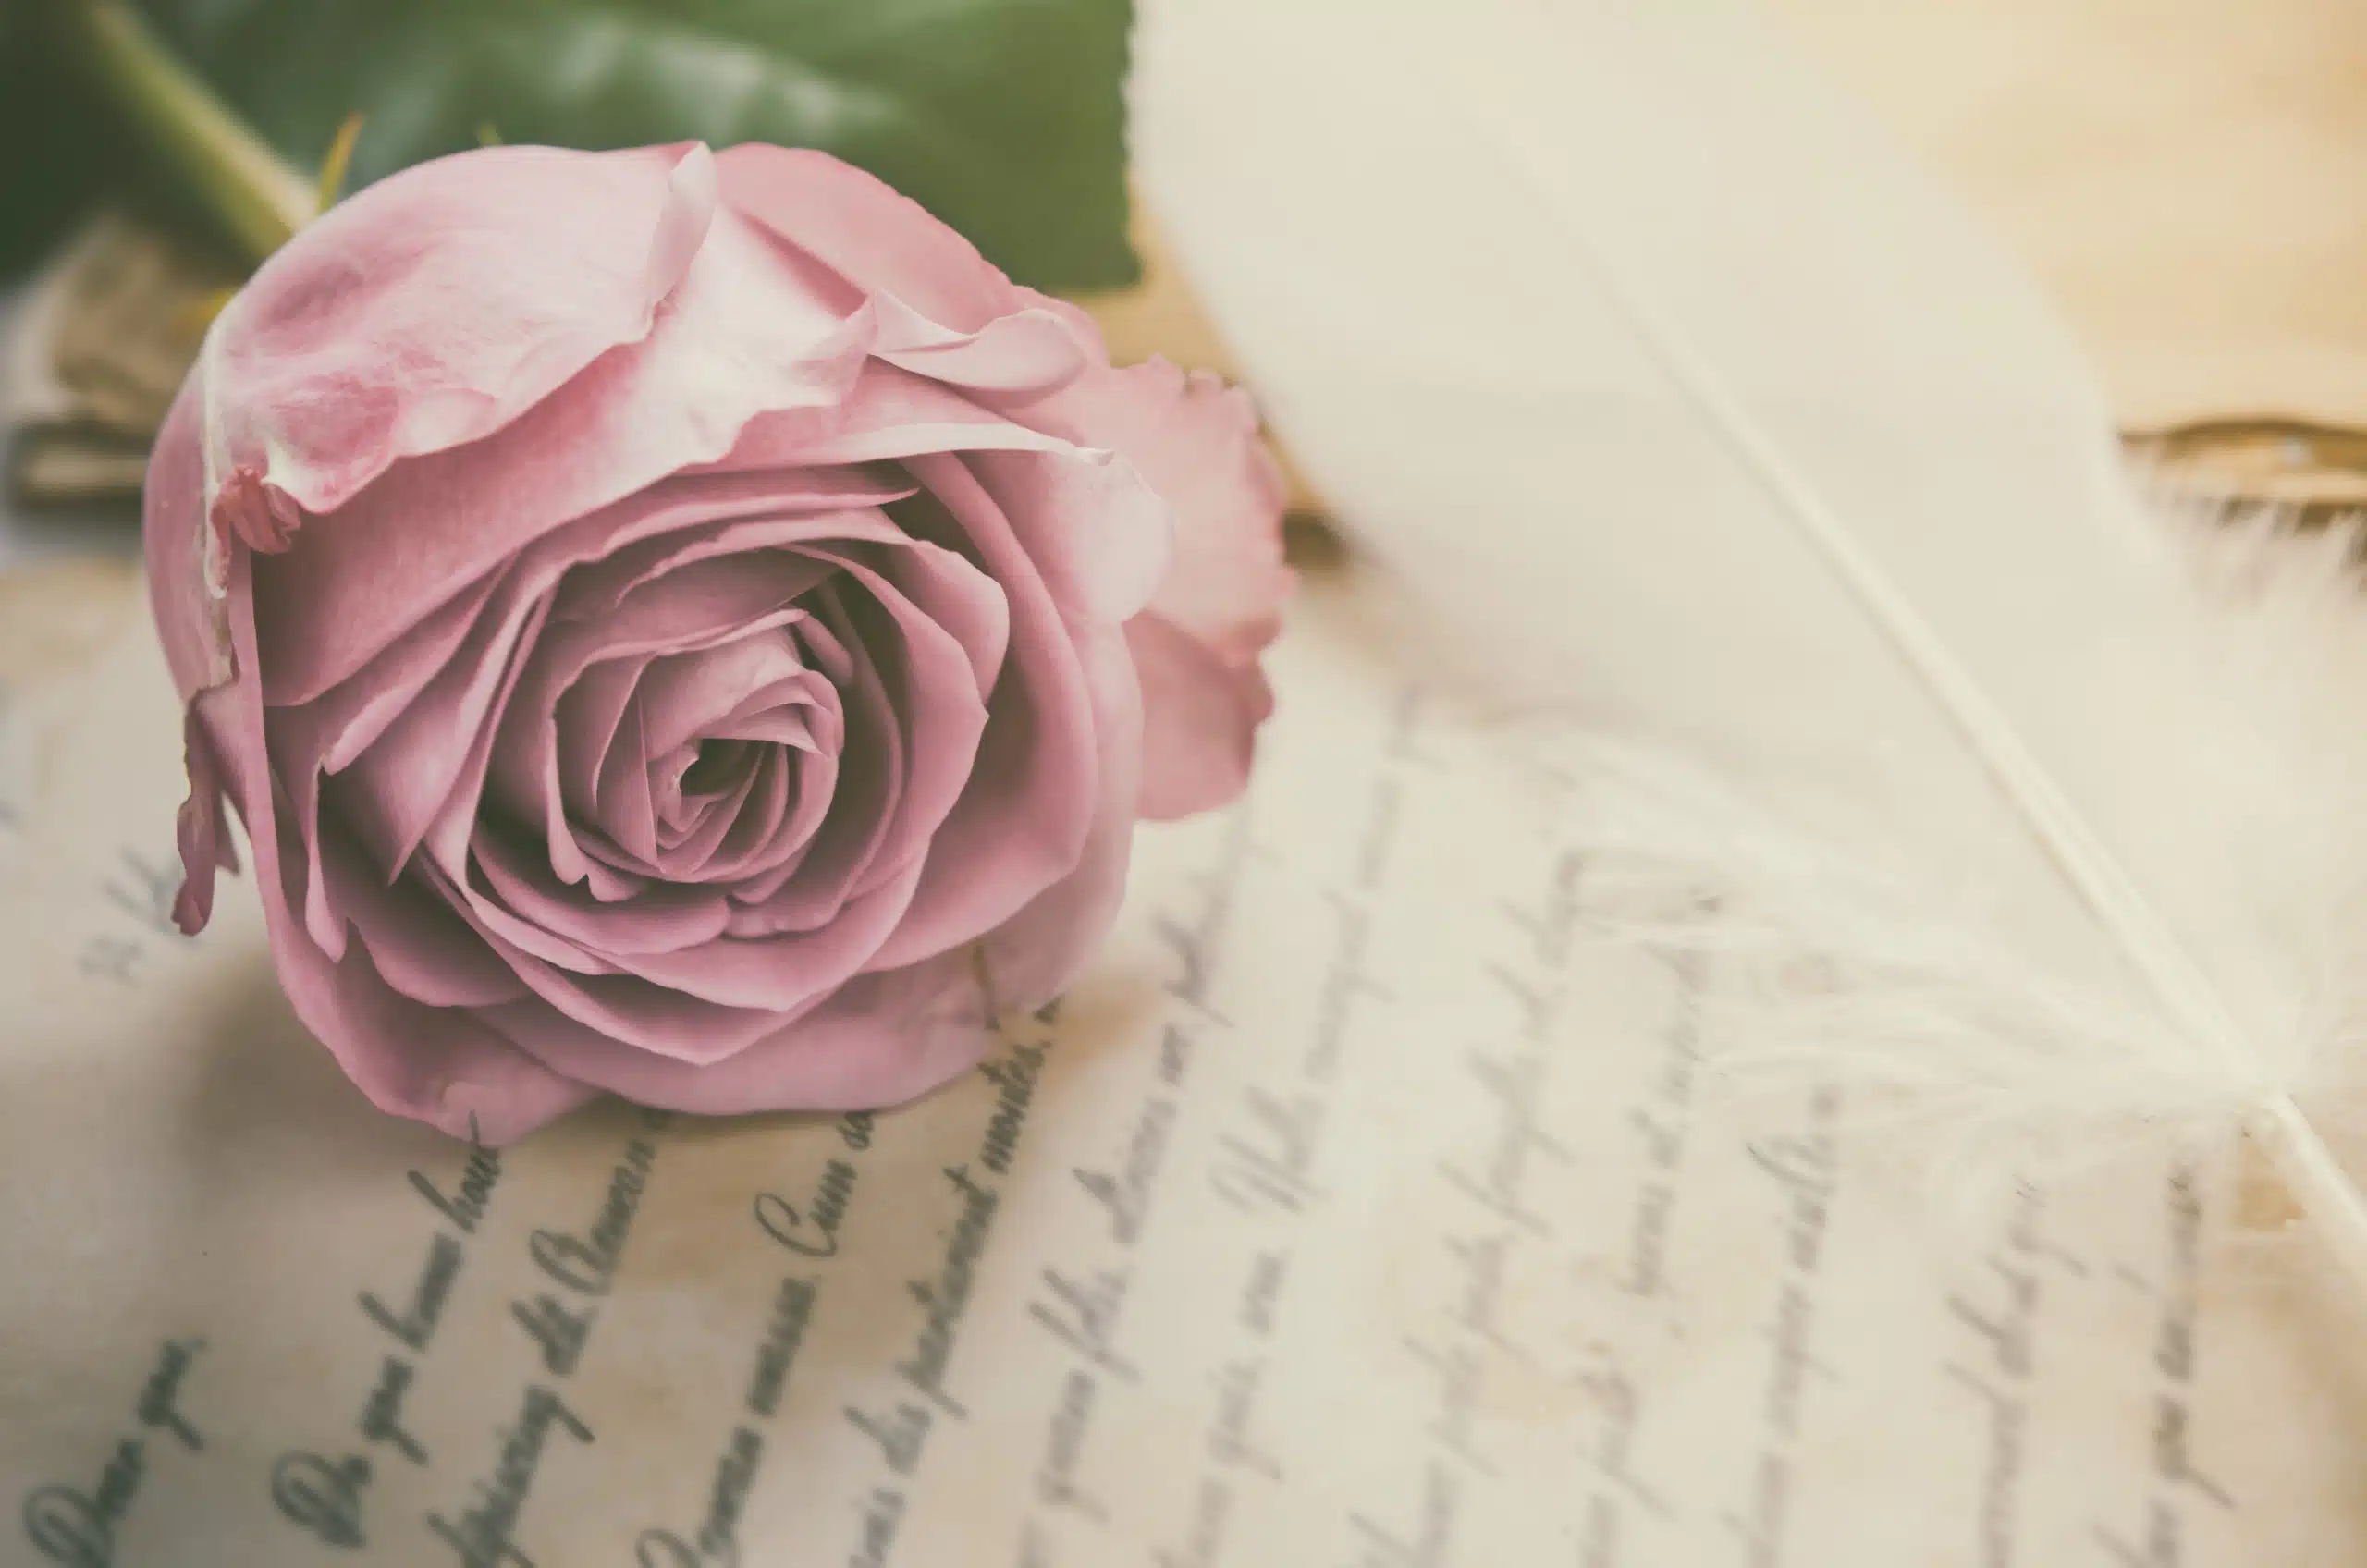 pink rose with love verses in vintage tone